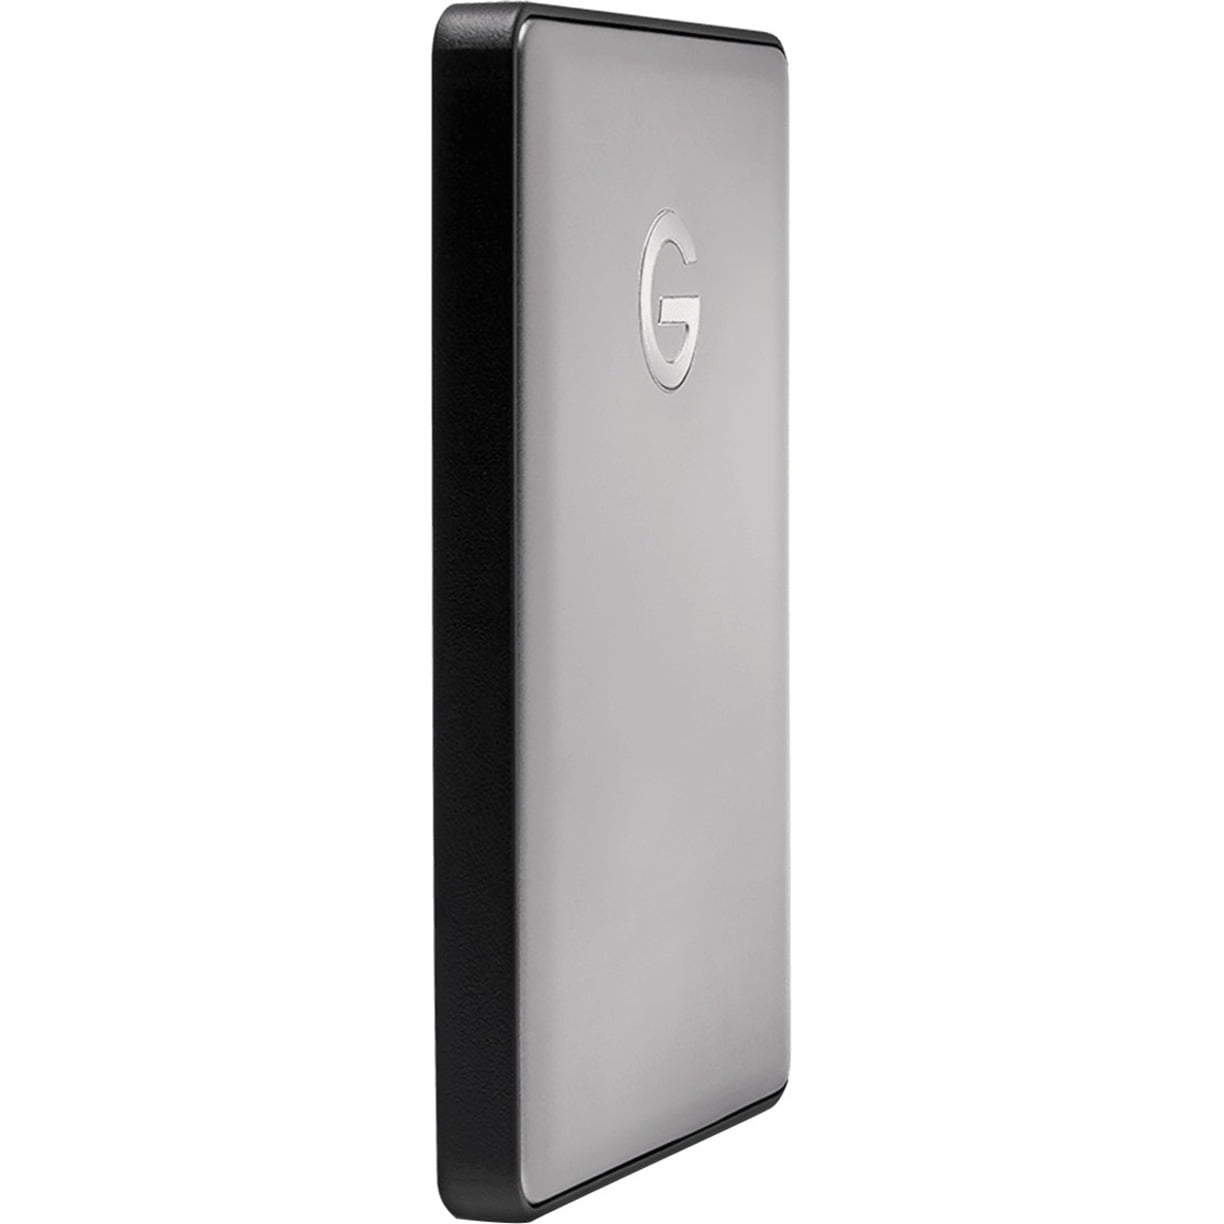 G-Technology 2TB G-DRIVE Mobile USB-C Portable External Hard Drive USB 3.1 Gen 1 Space Gray 0G10317 